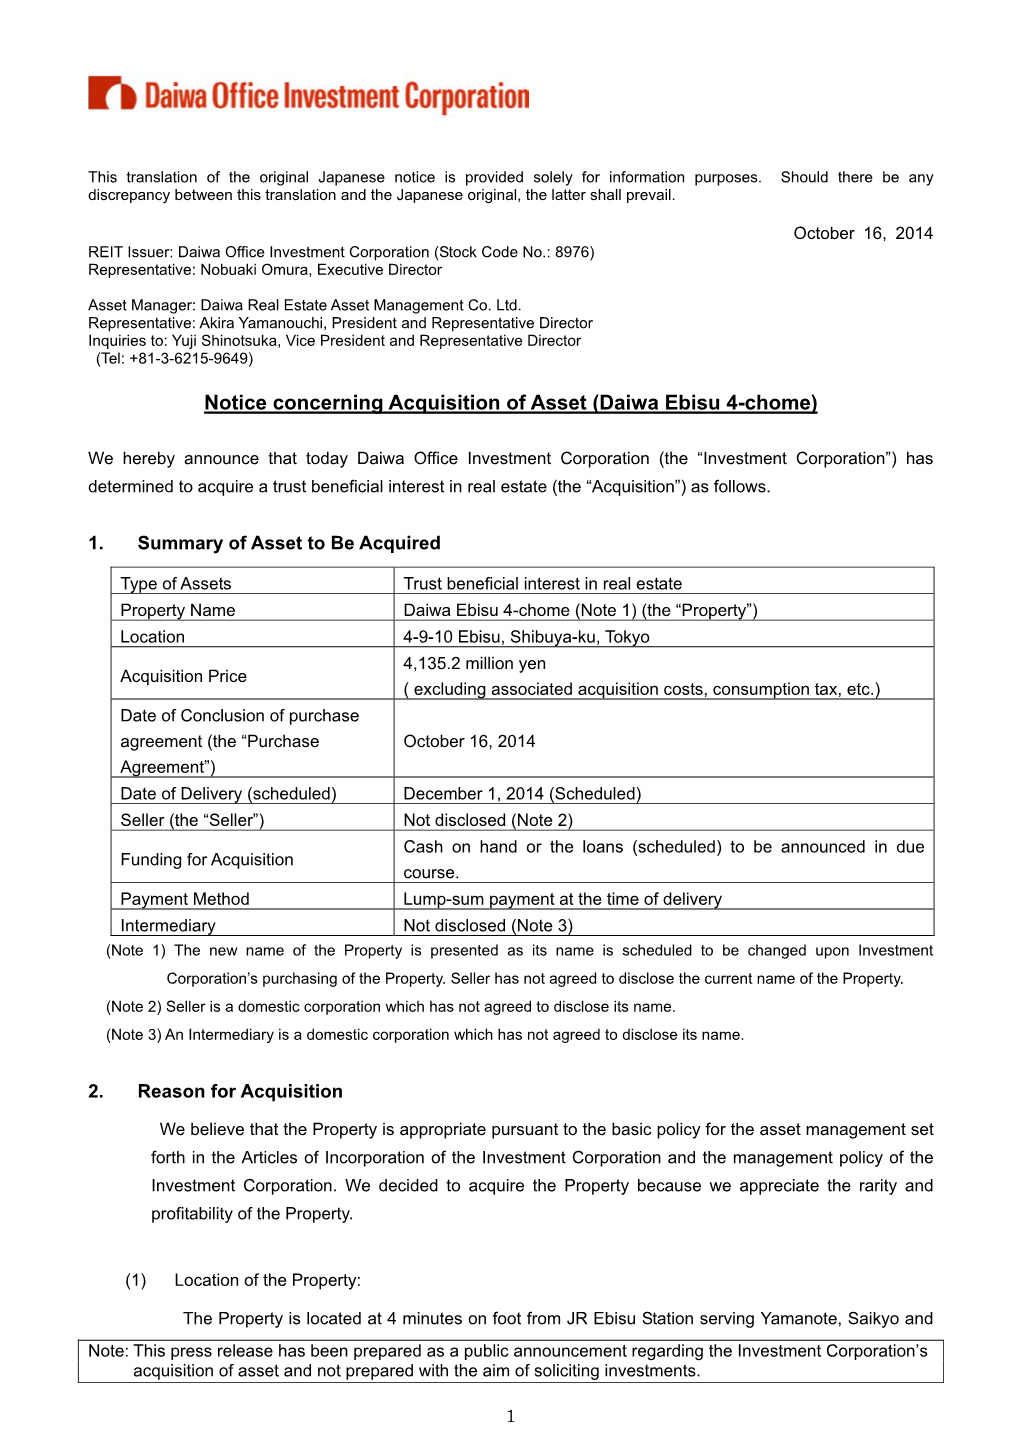 Notice Concerning Acquisition of Asset (Daiwa Ebisu 4-Chome)(PDF:368.6